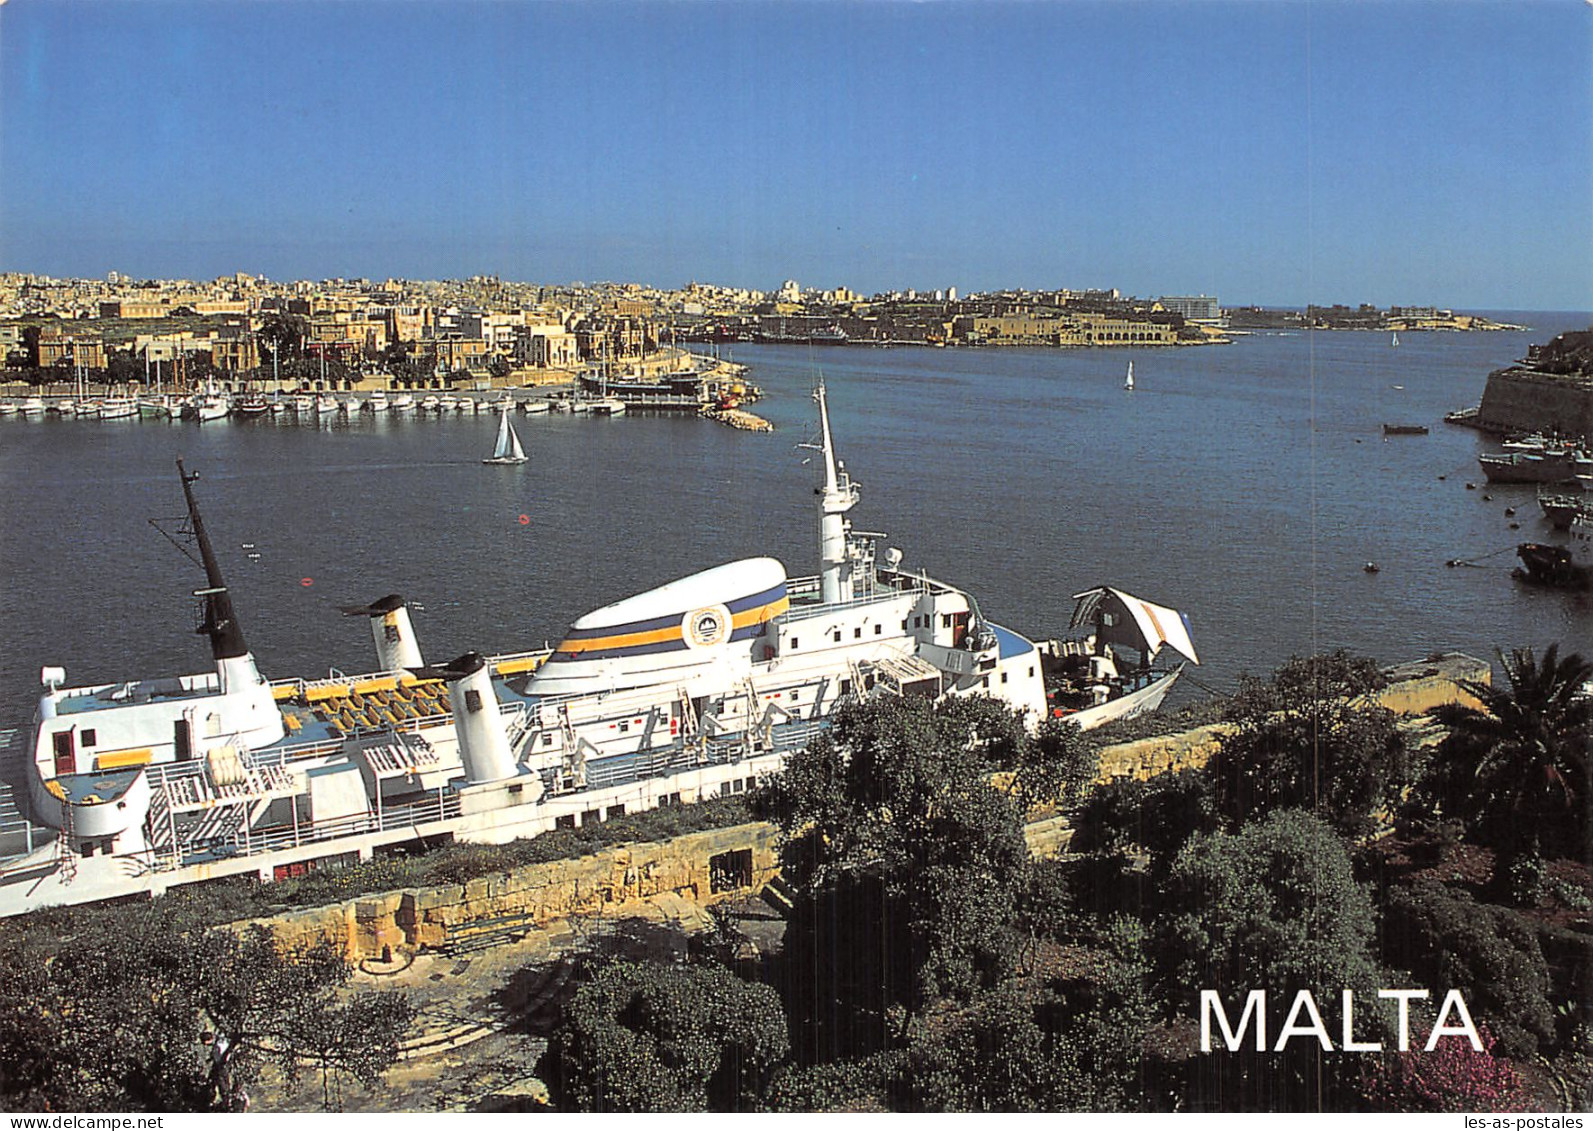 MALTA MAISON GARDENS - Malte